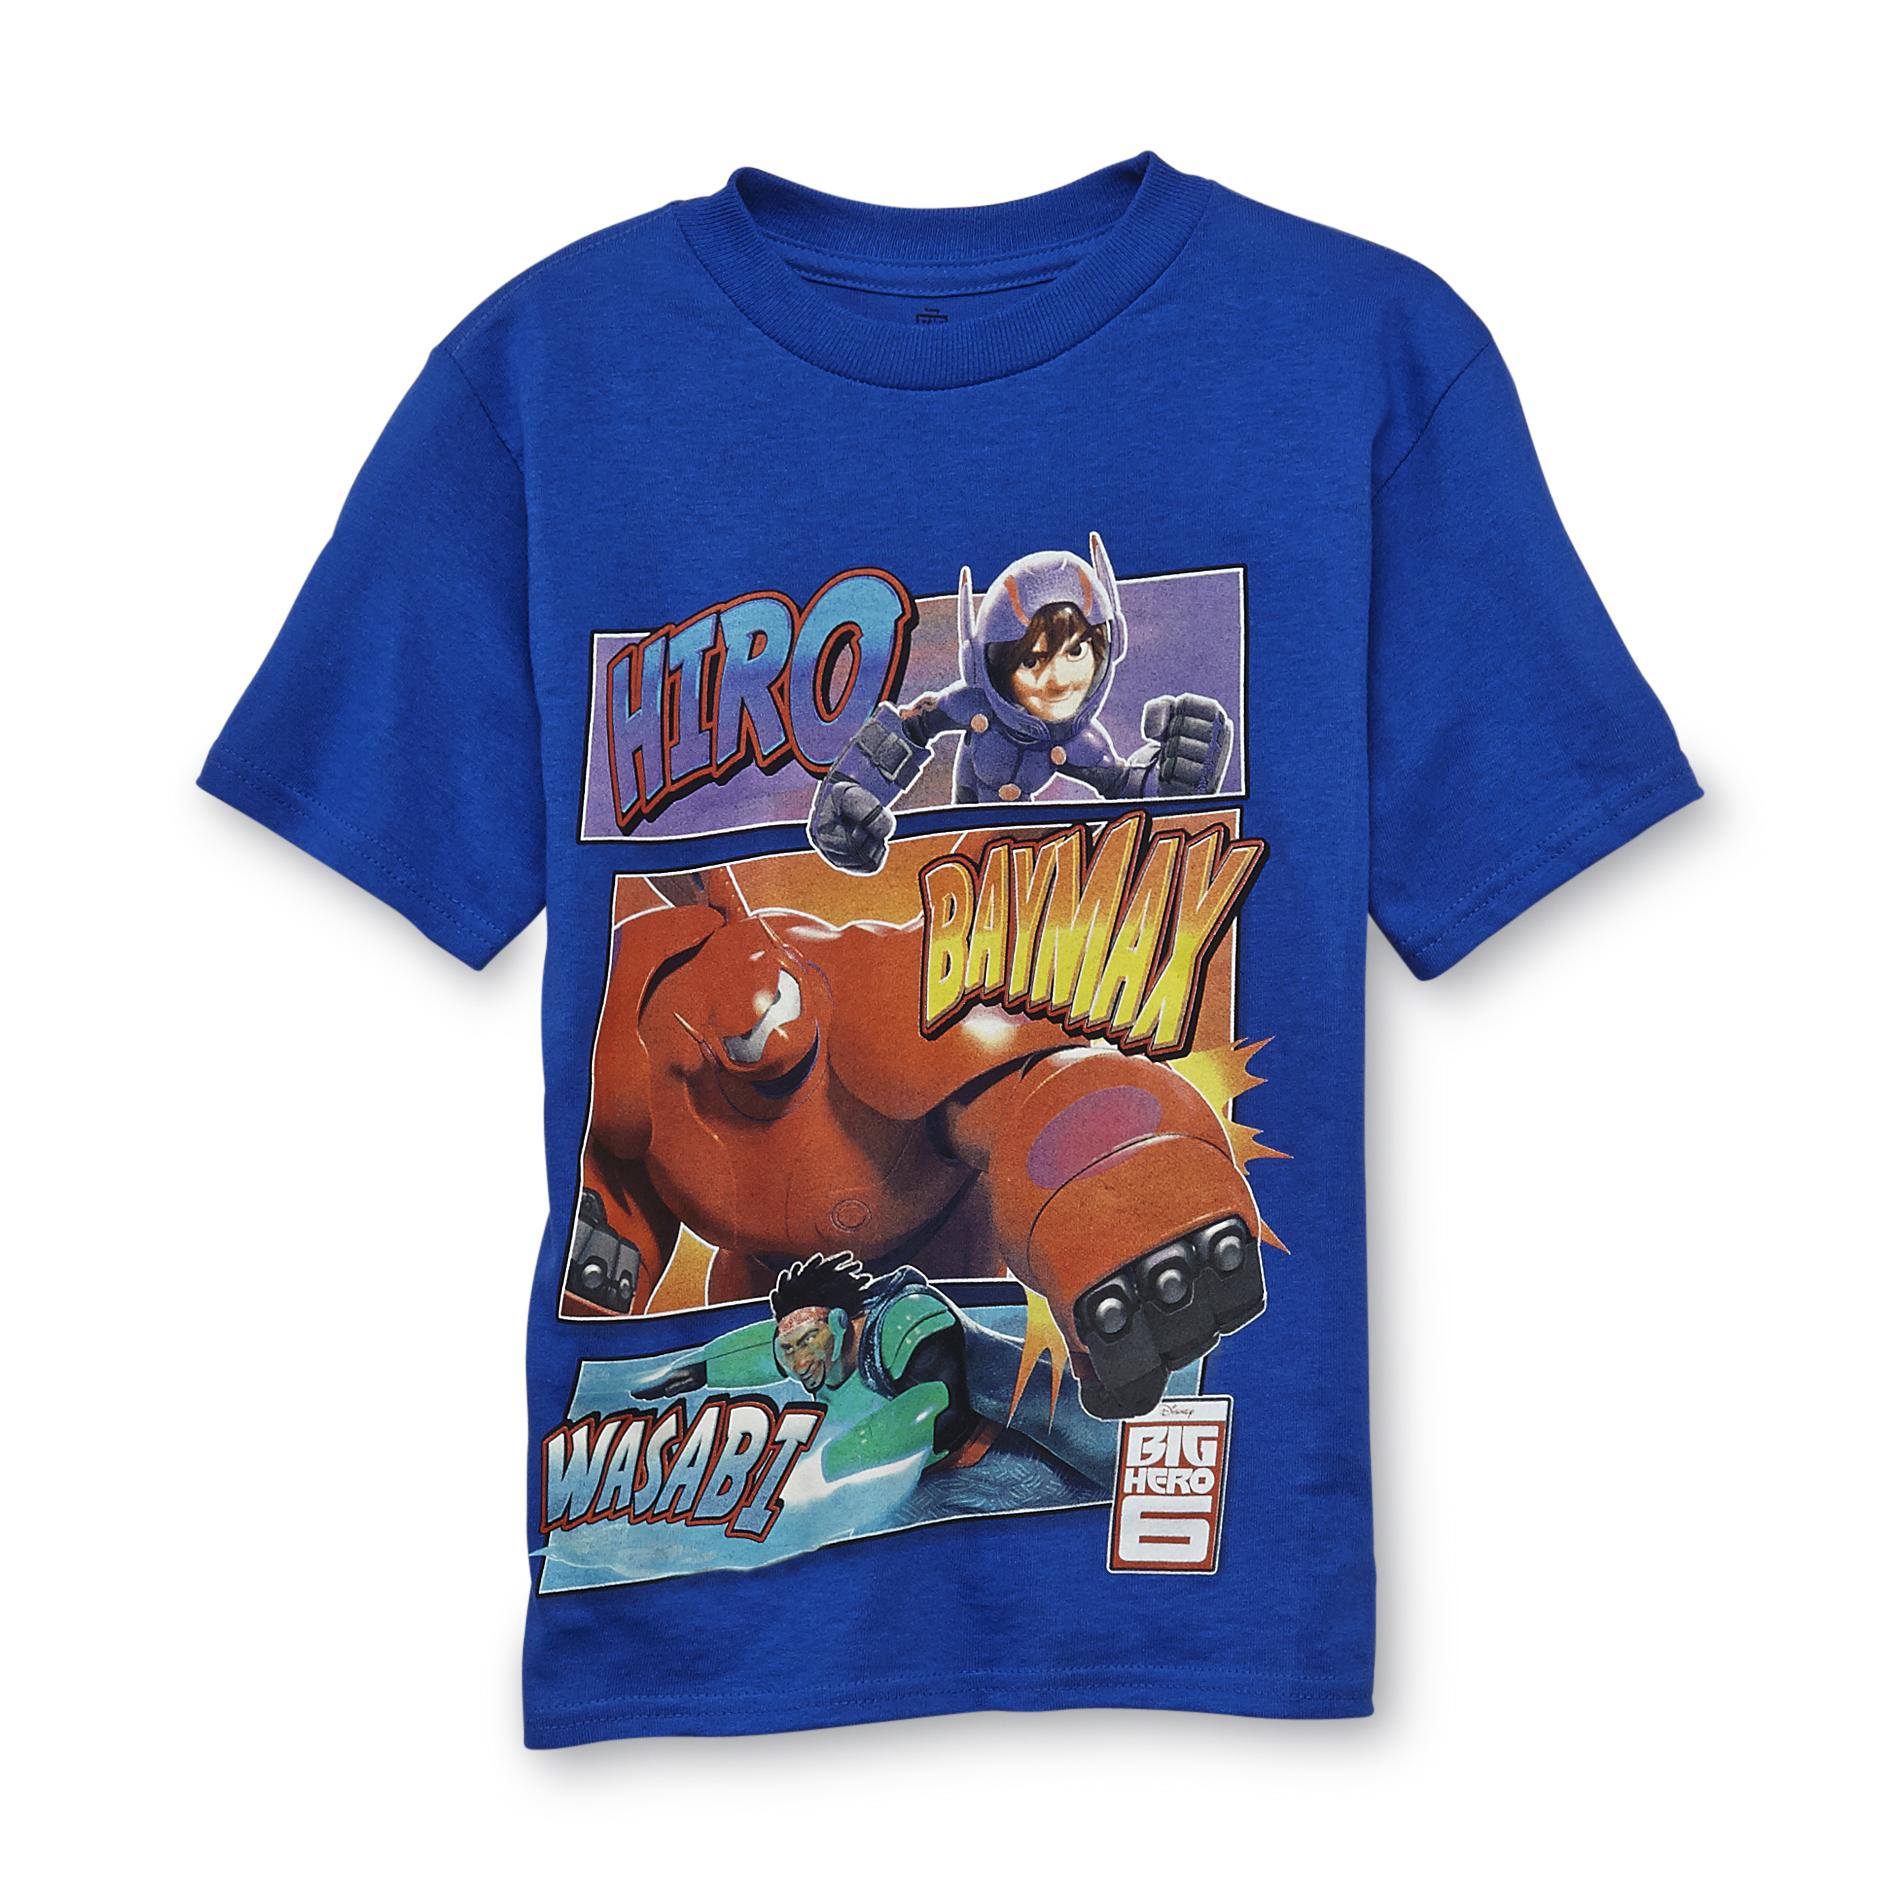 Disney Big Hero 6 Boy's Graphic T-Shirt